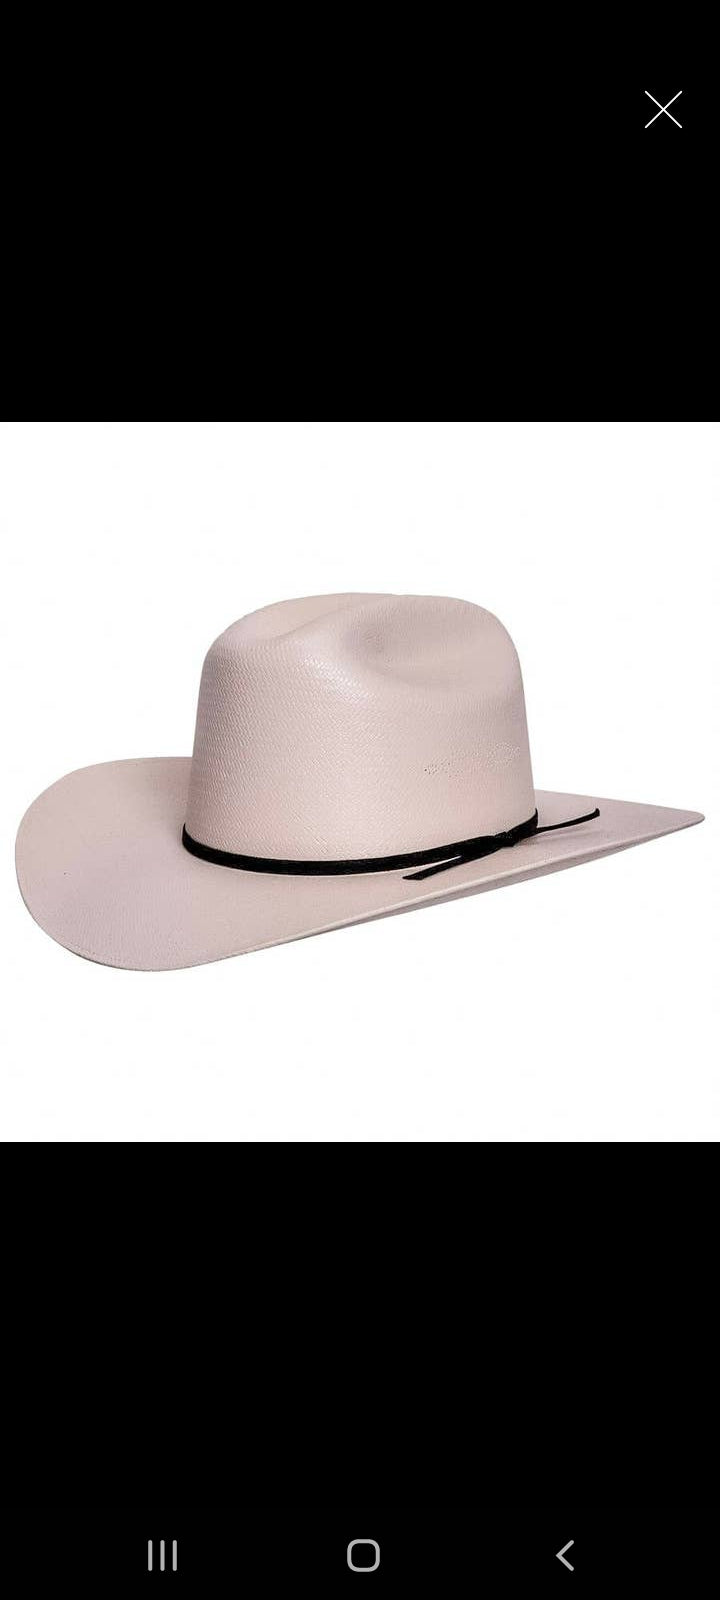 Ft.Worth Cowboy Hat